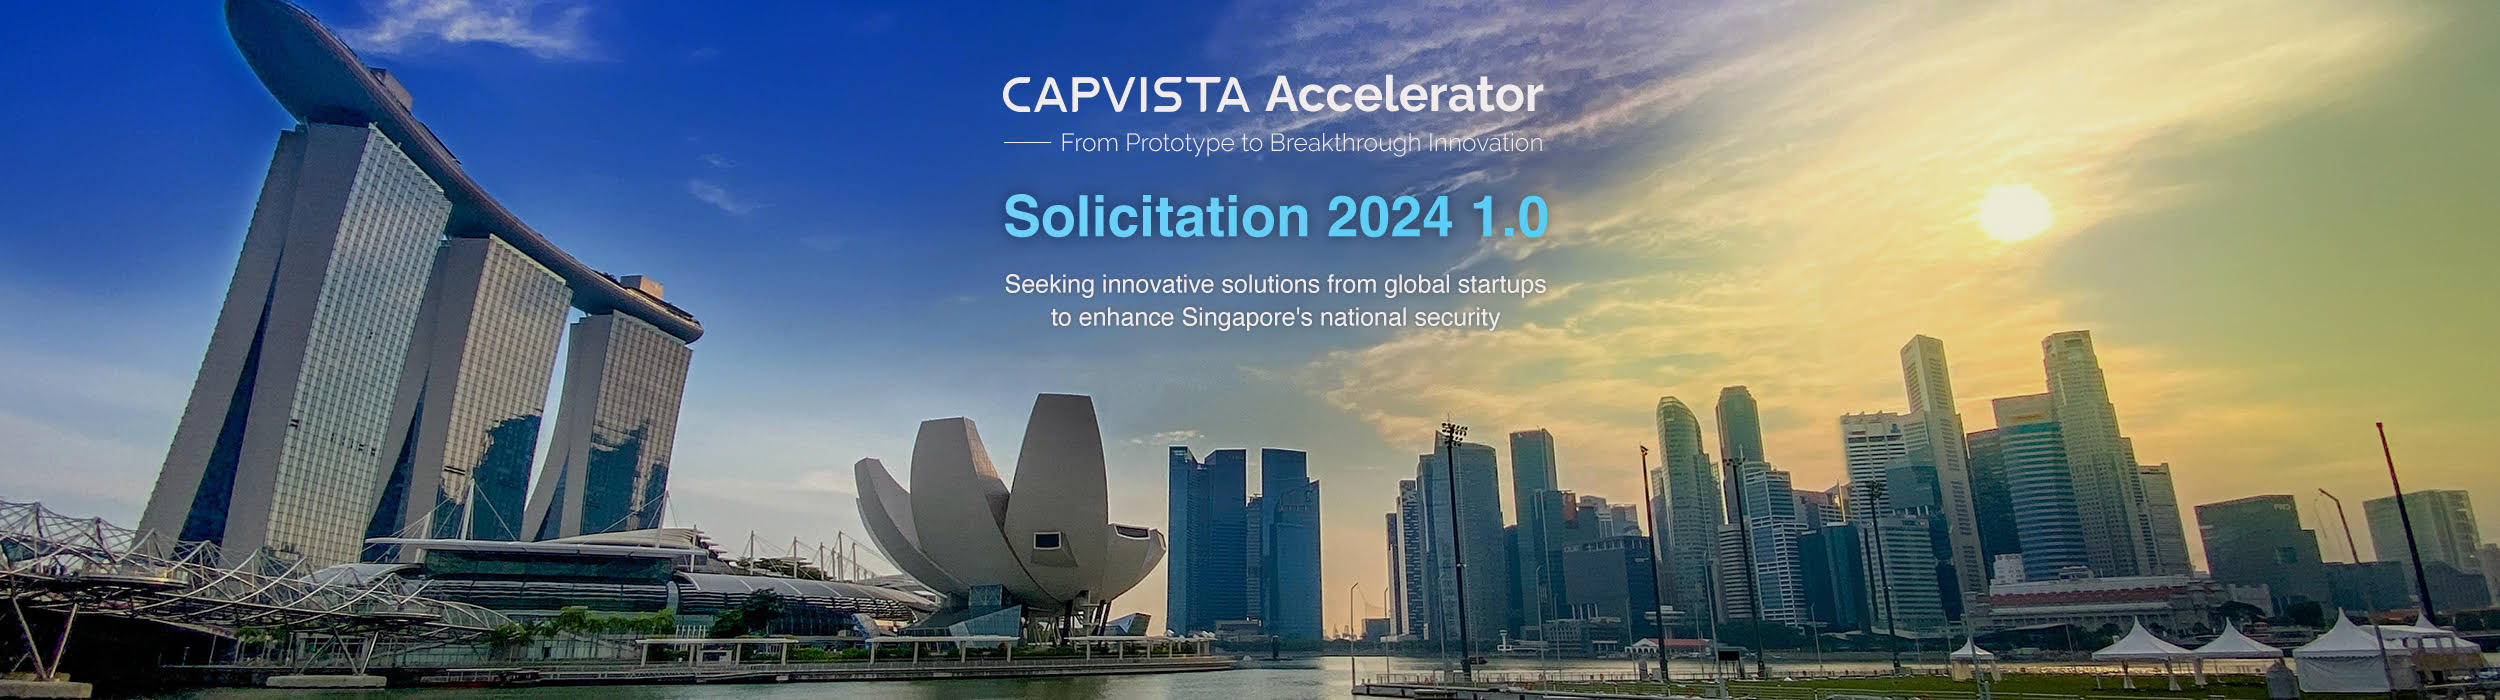 Cap Vista Accelerator - Solicitation 2024 1.0